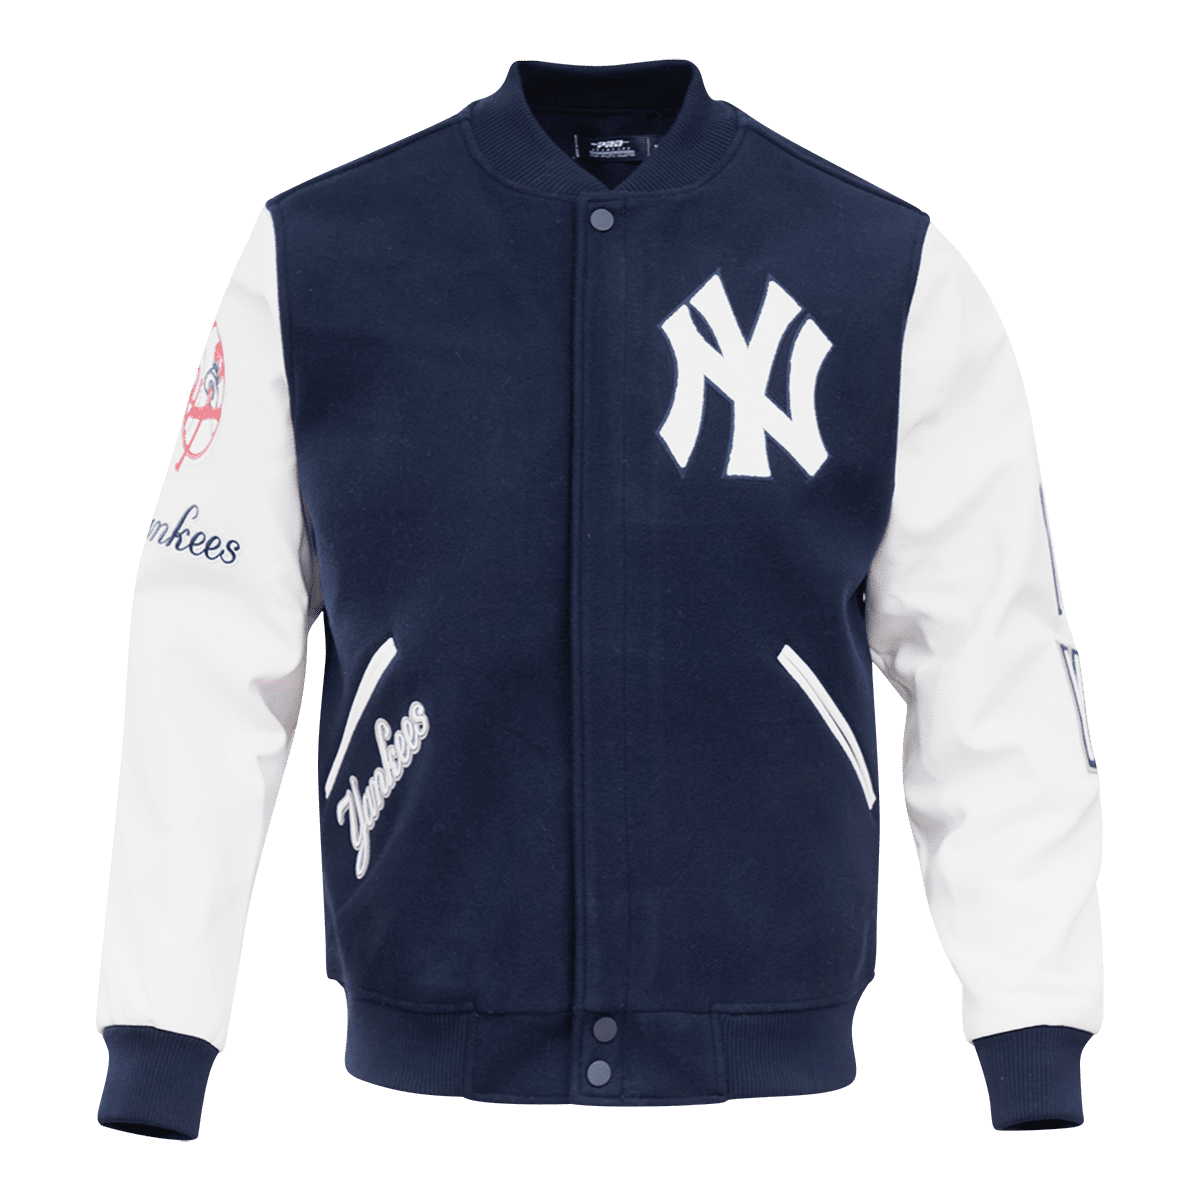 Pro Standard Luxury Athletic Collection Mash Up Jacket New York Yankees Men’s-NAVY White M